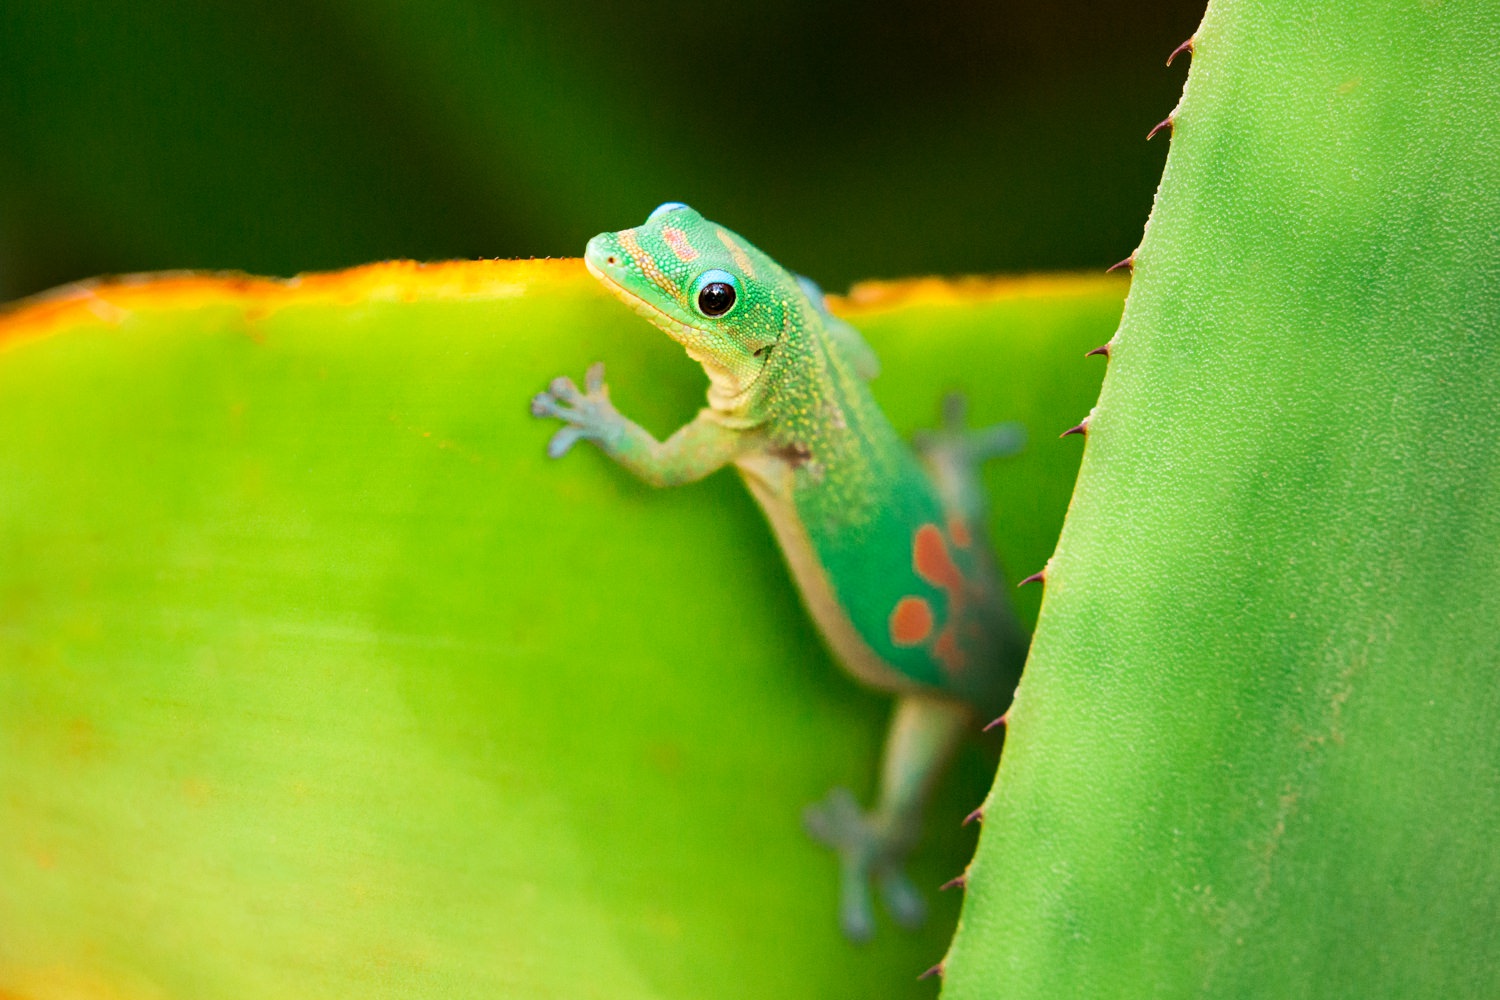 cameron-zegers-travel-photographer-seattle-wildlife-gecko.jpg